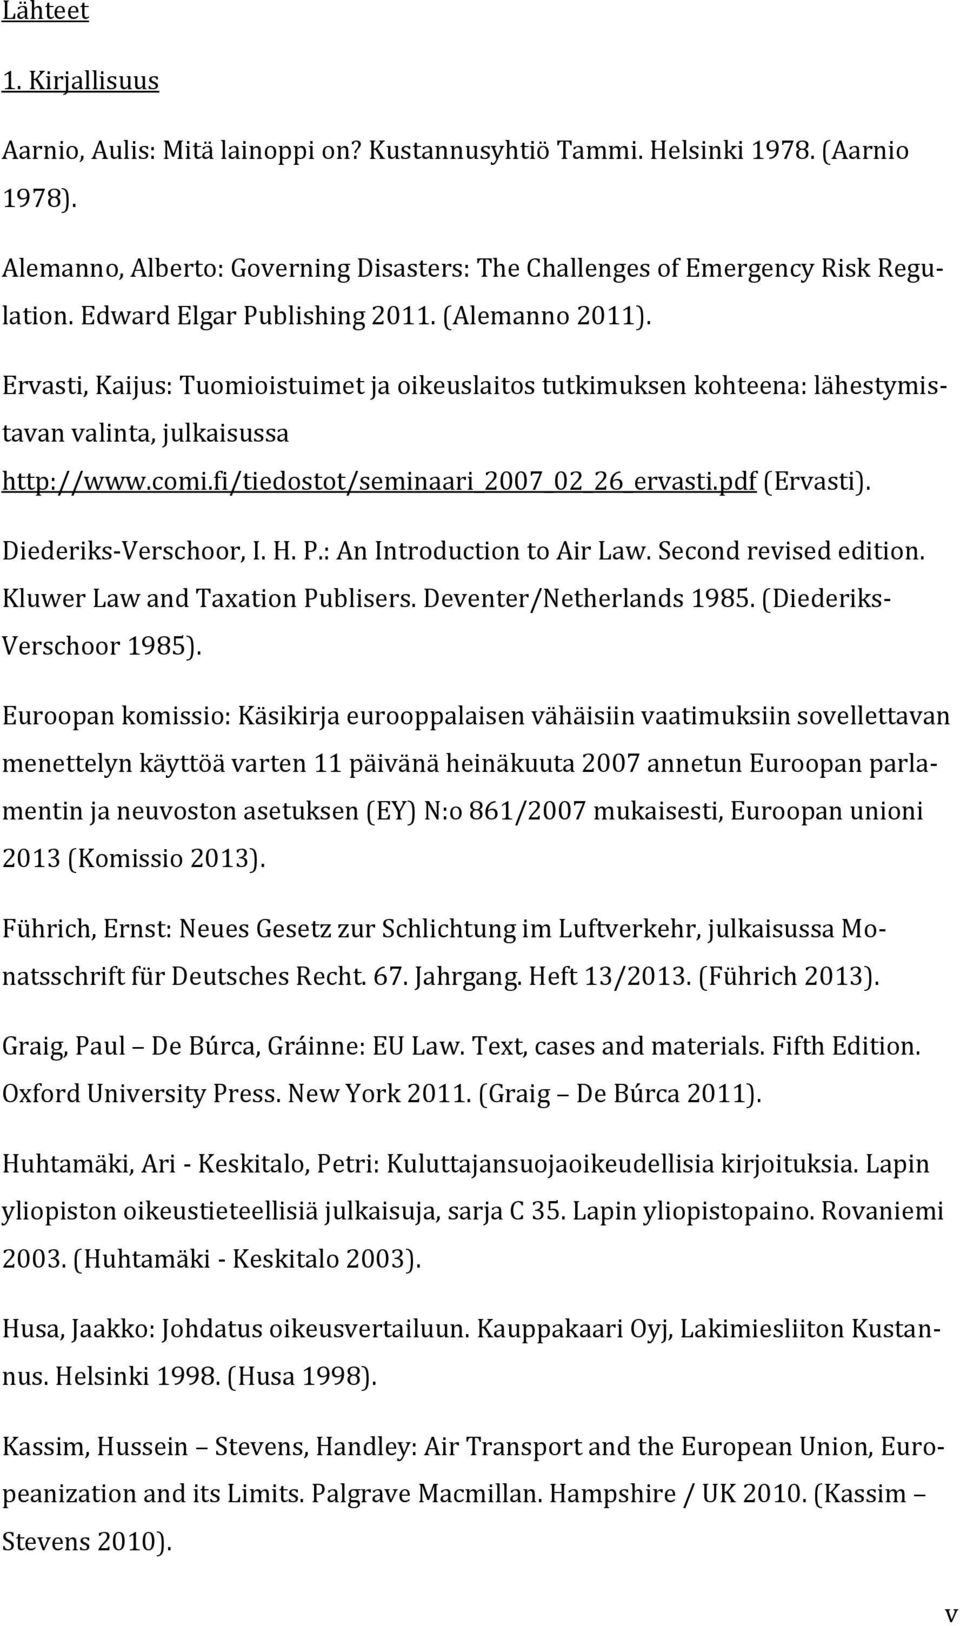 fi/tiedostot/seminaari_2007_02_26_ervasti.pdf (Ervasti). Diederiks-Verschoor, I. H. P.: An Introduction to Air Law. Second revised edition. Kluwer Law and Taxation Publisers.